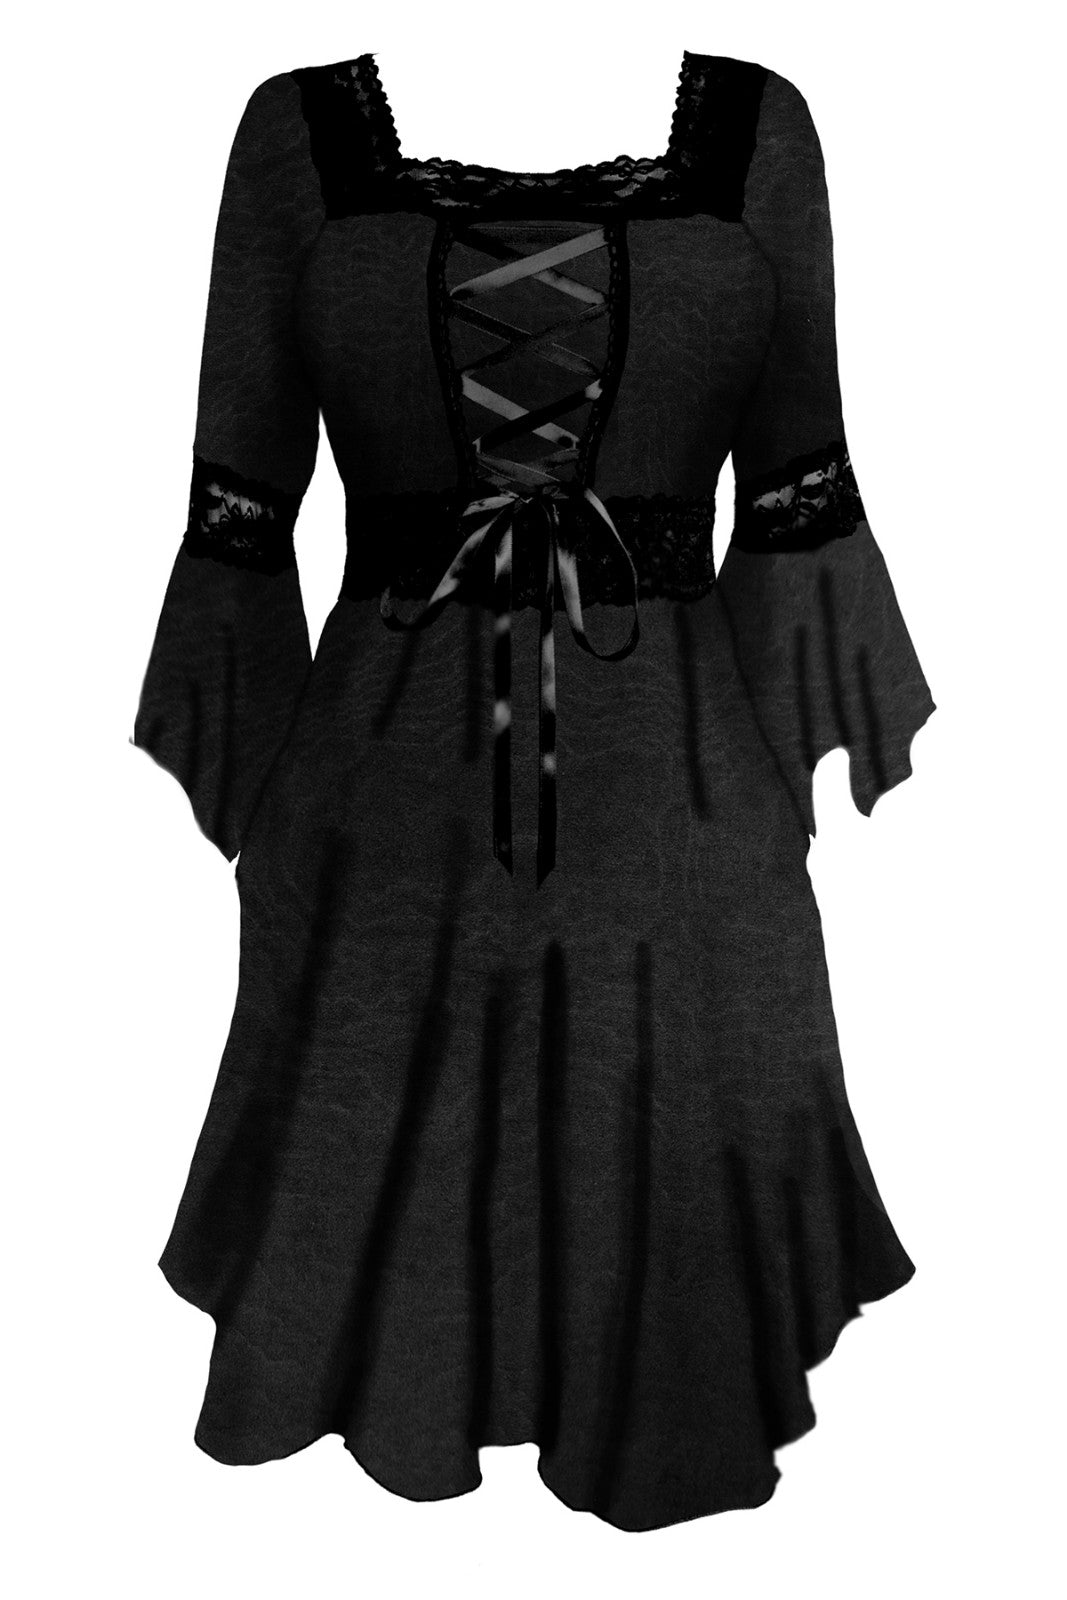 Eternal Vampire Costume with Renaissance Dress, Black Rain - Dare